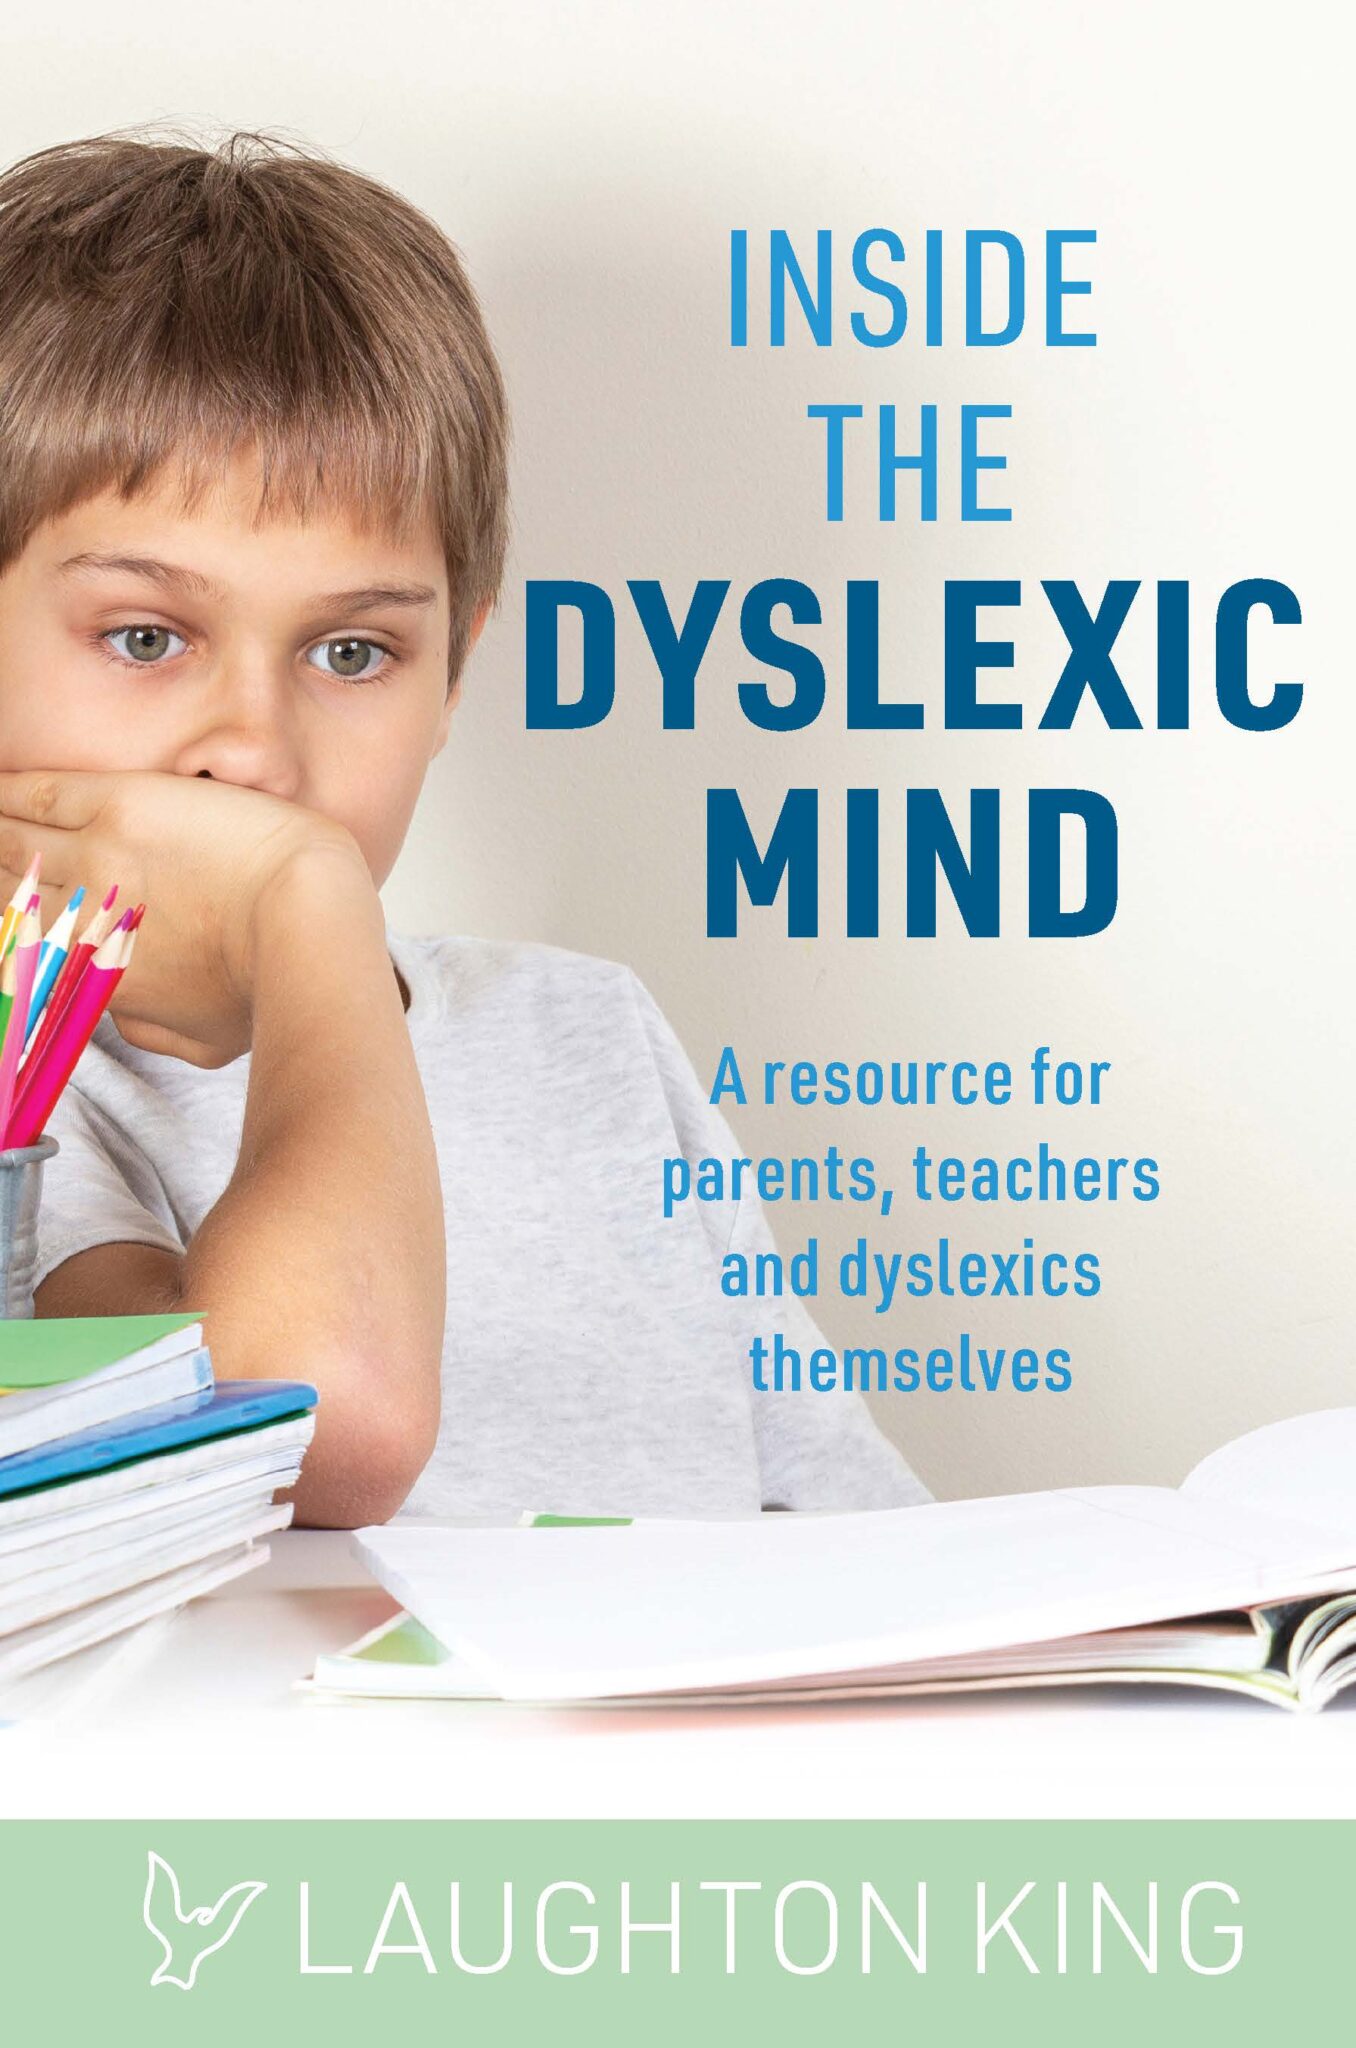 Inside a Dyslexic mind